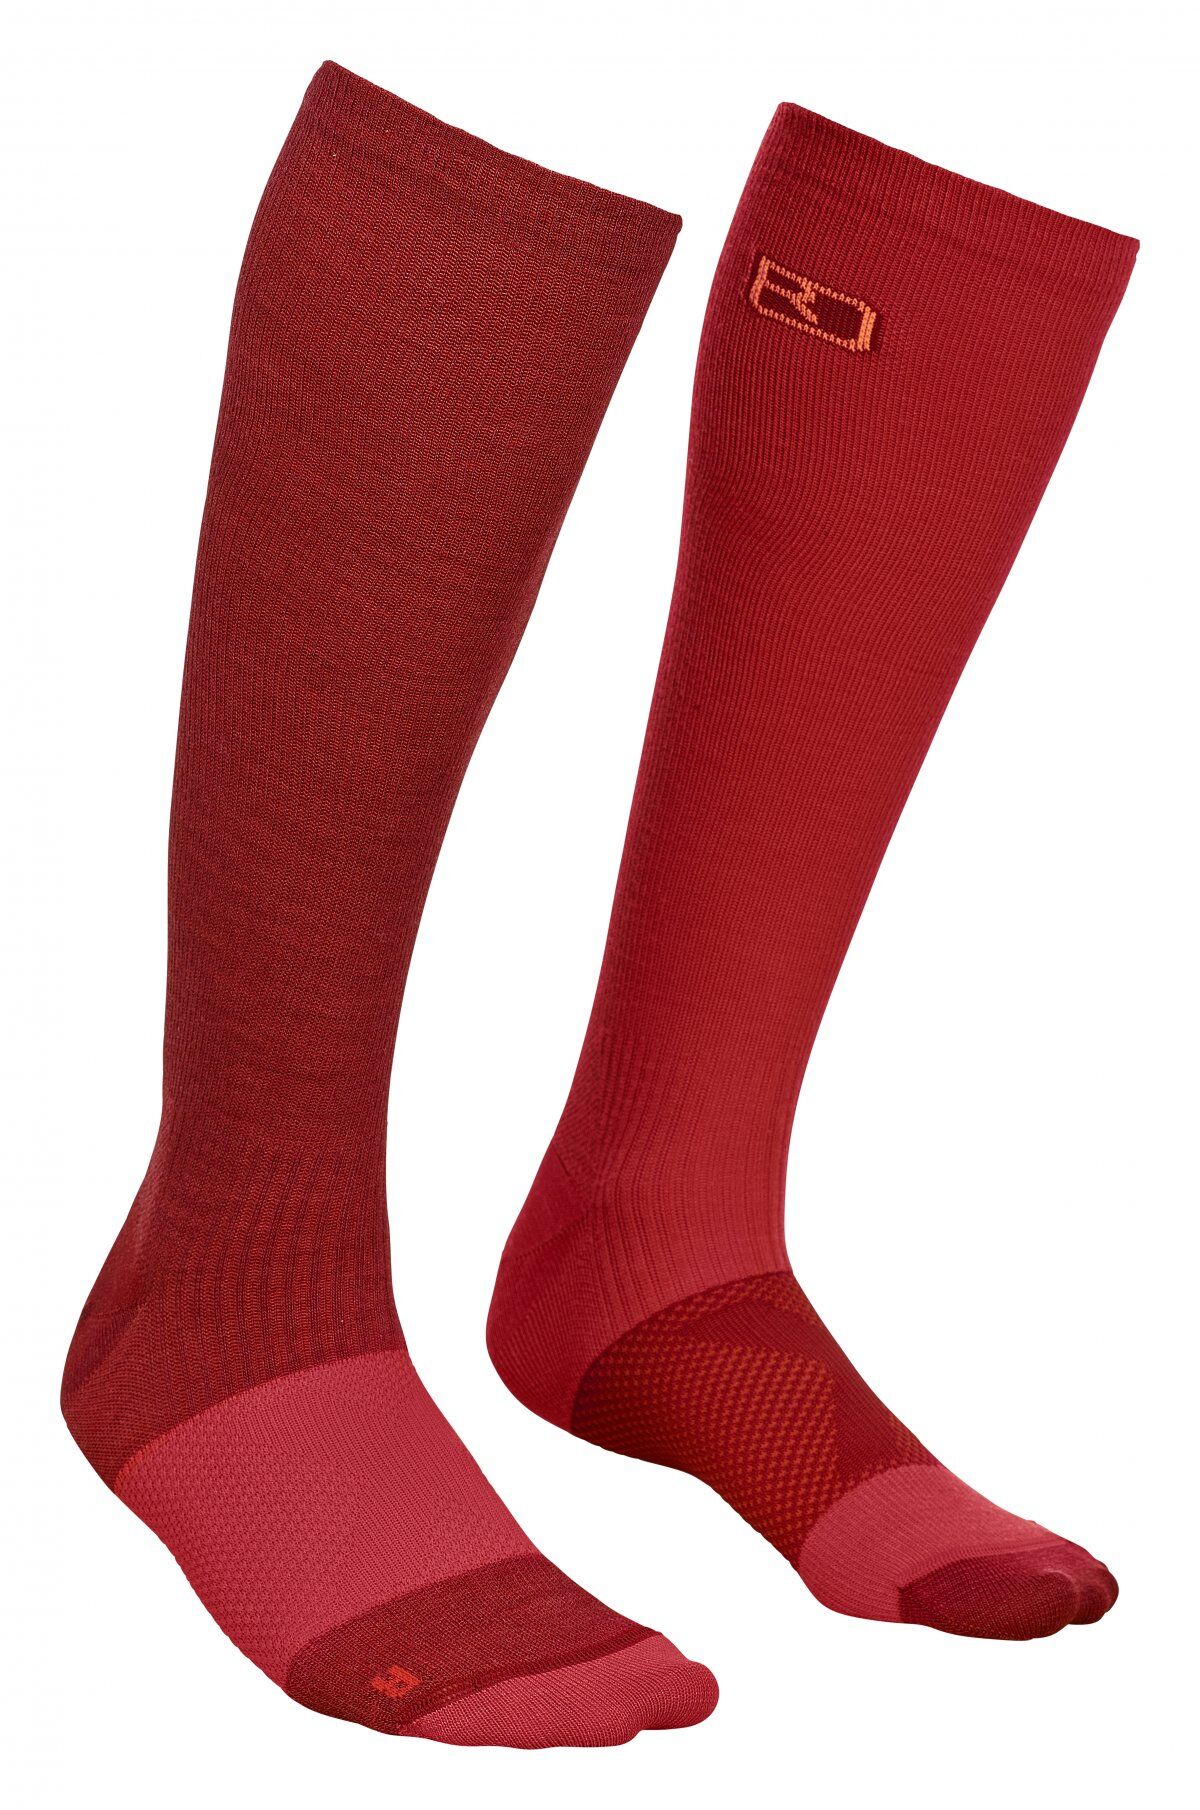 Ortovox Tour Compression Socks - Walking socks - Women's